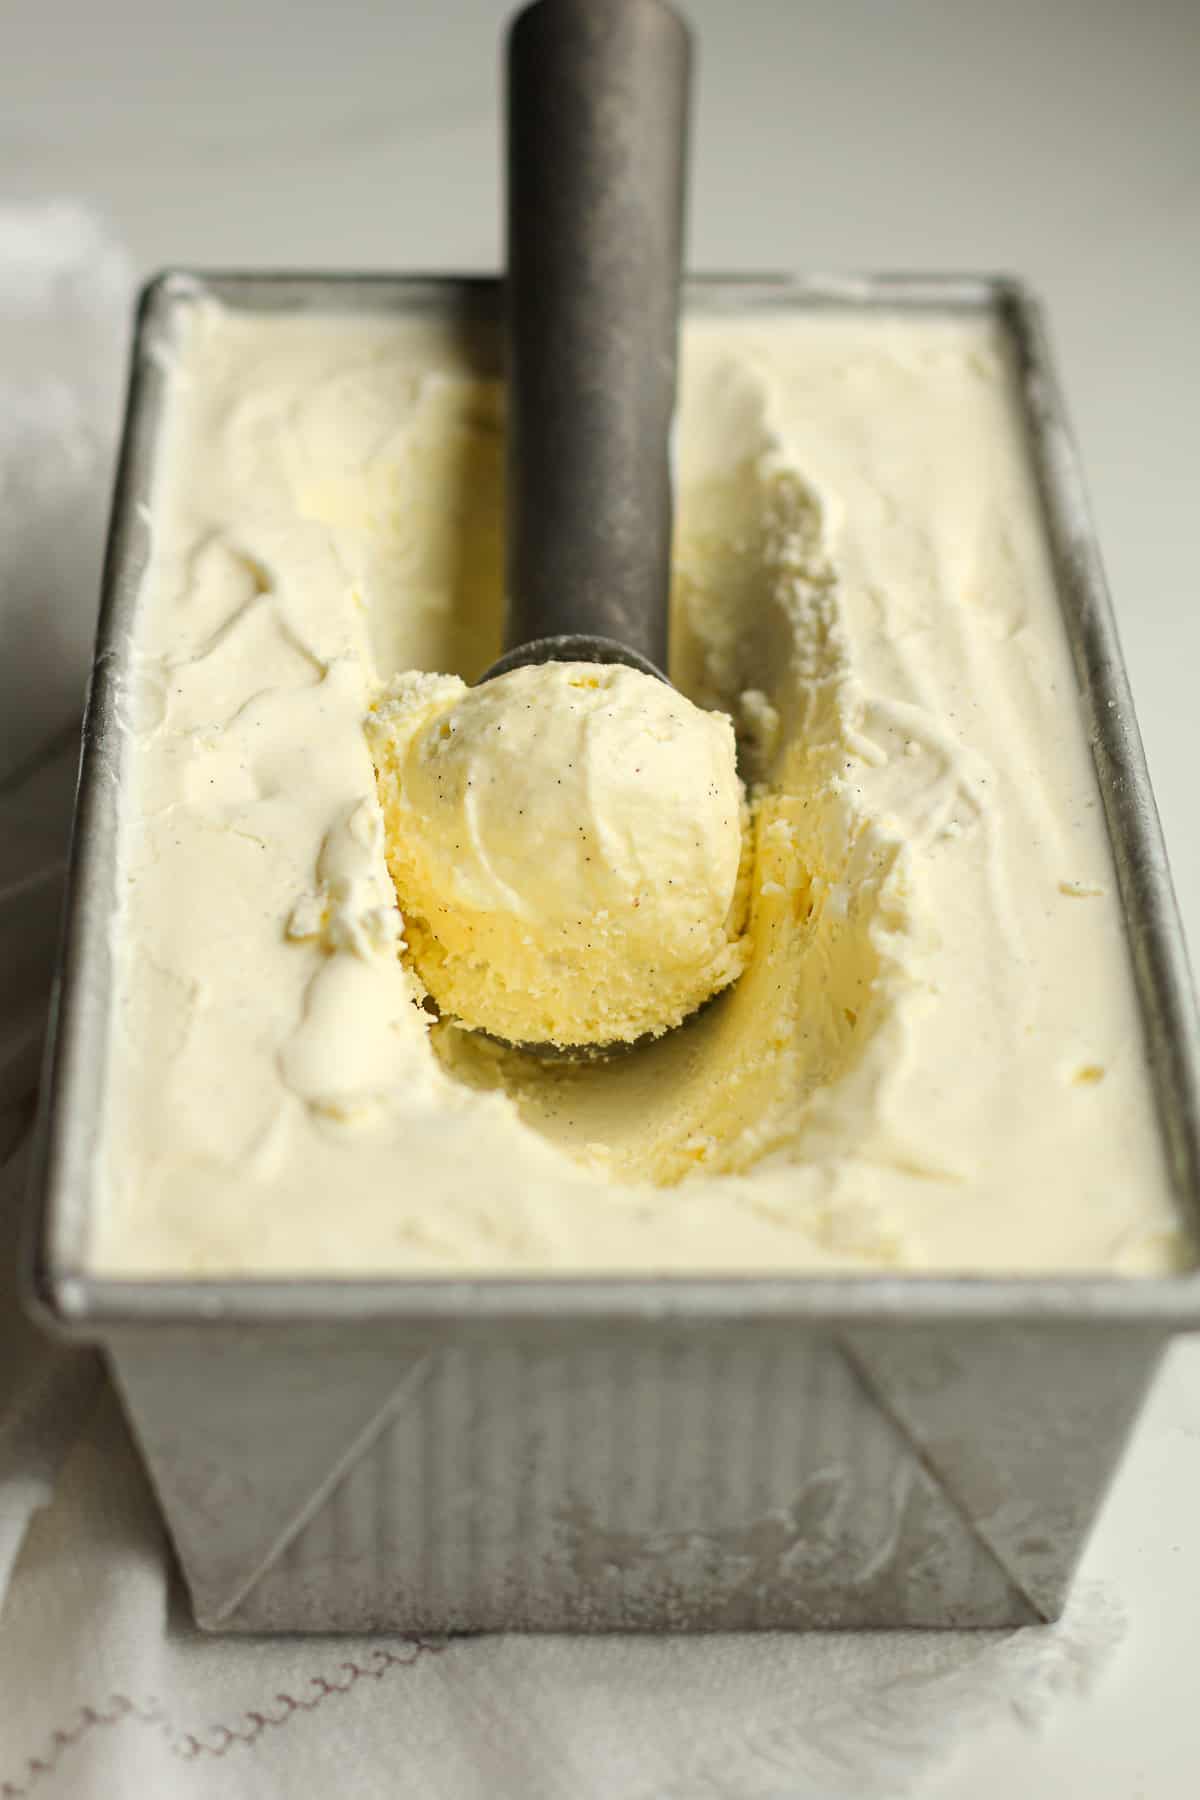 Homemade Vanilla Bean Ice Cream